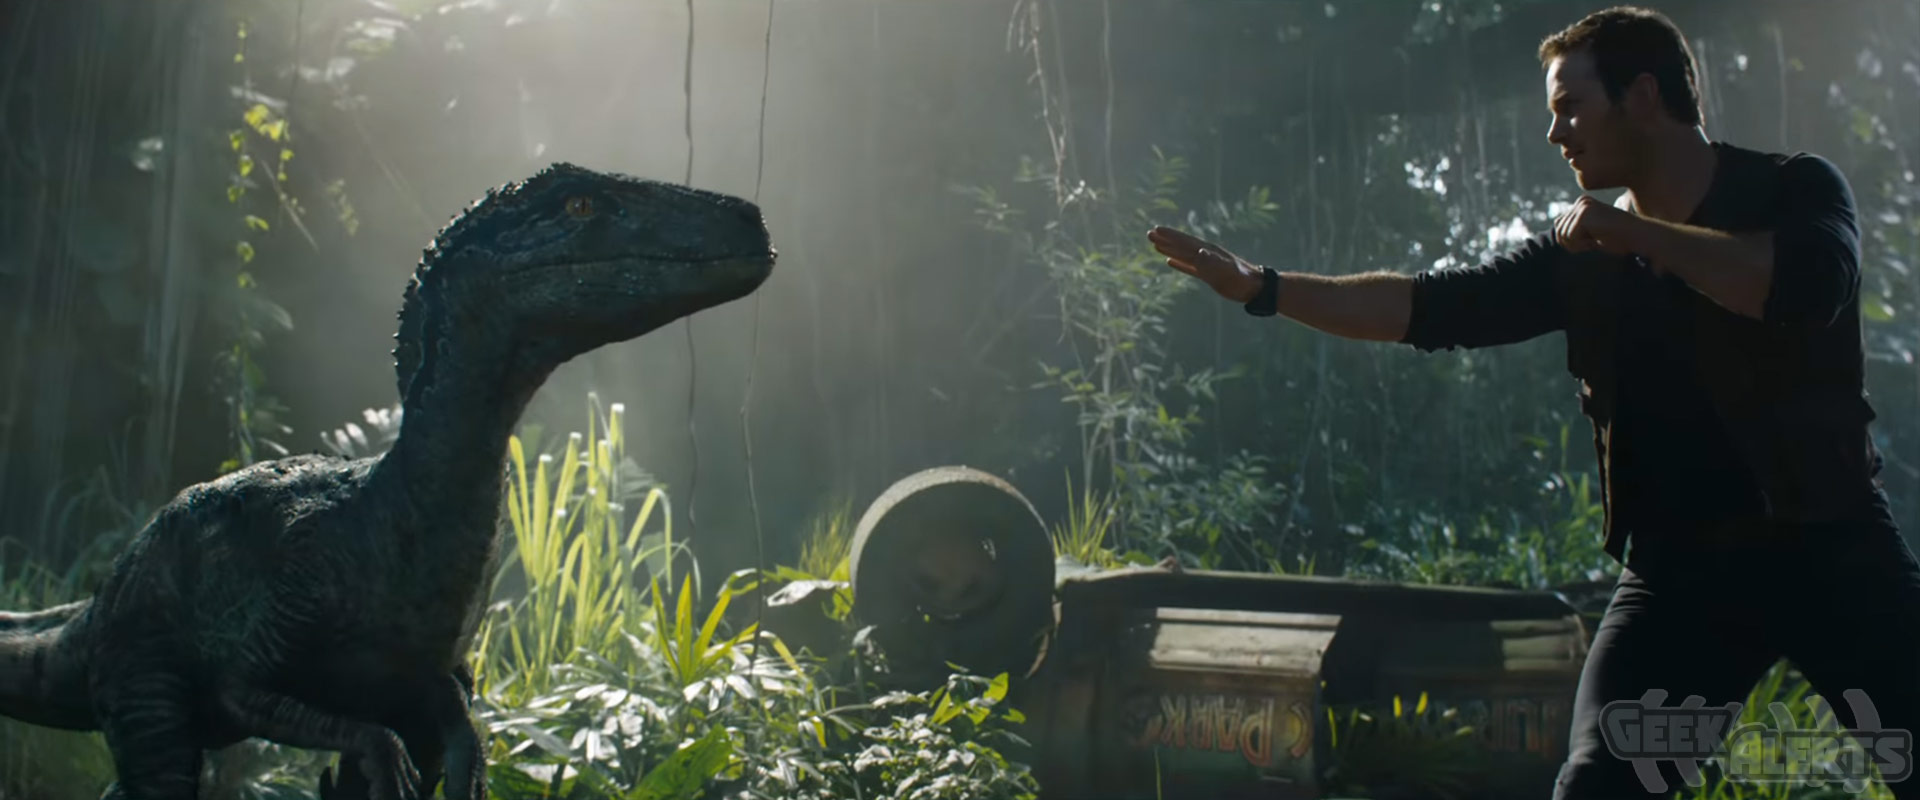 Jurassic World Fallen Kingdom Official Trailer 2 Hd 